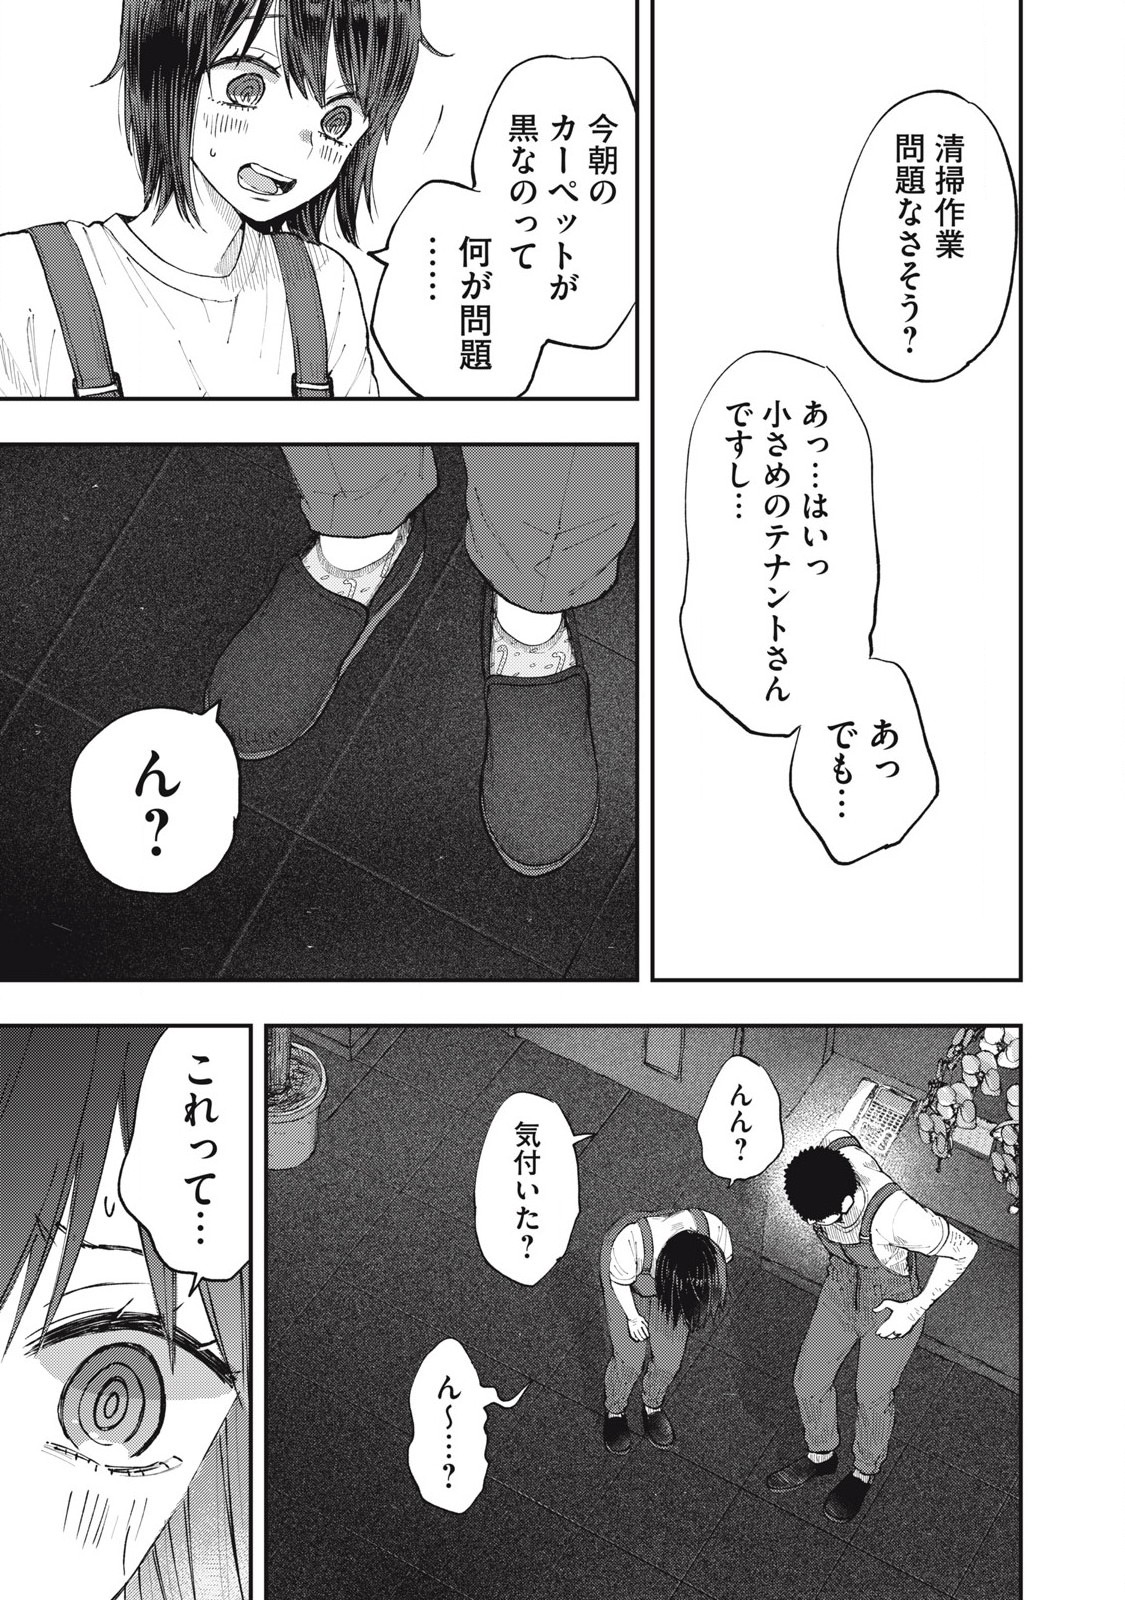 Seisouin Nono-chan Kyou no Tsubuyaki - Chapter 4 - Page 9